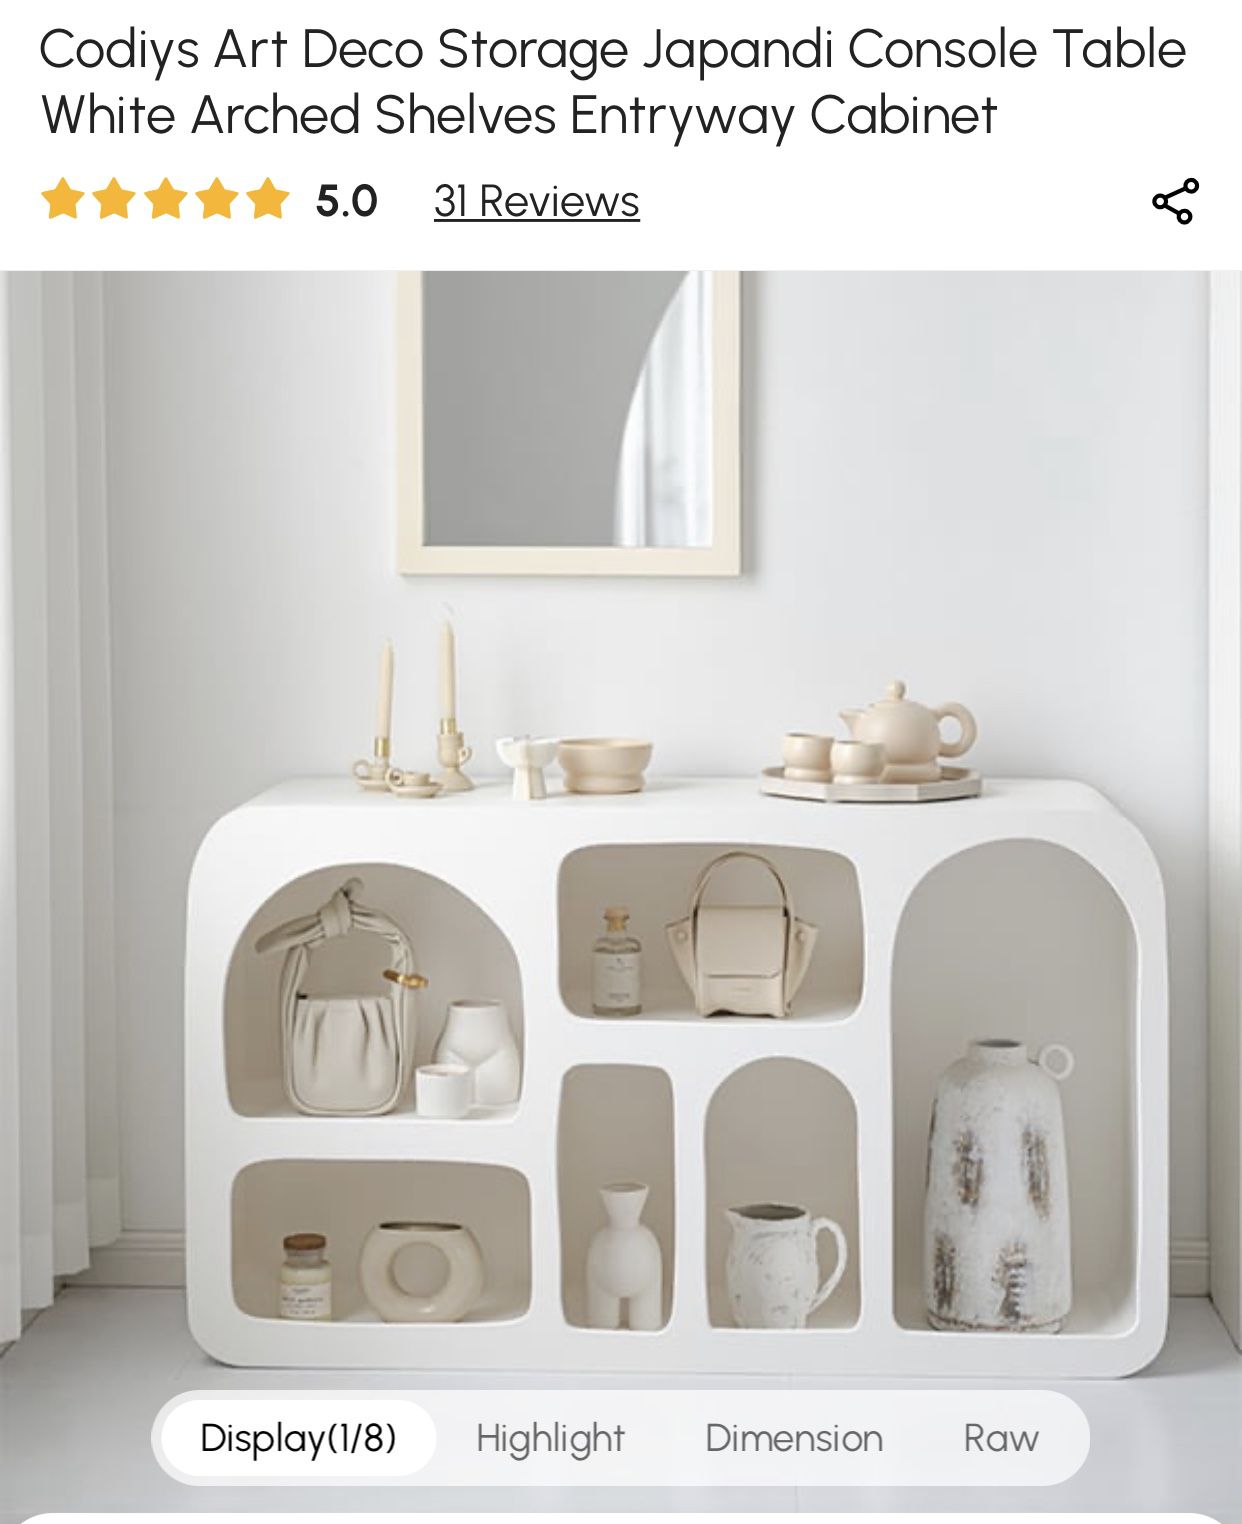  Codiys Art Deco Storage Japandi Console Table White Arched Shelves Entryway Cabinet